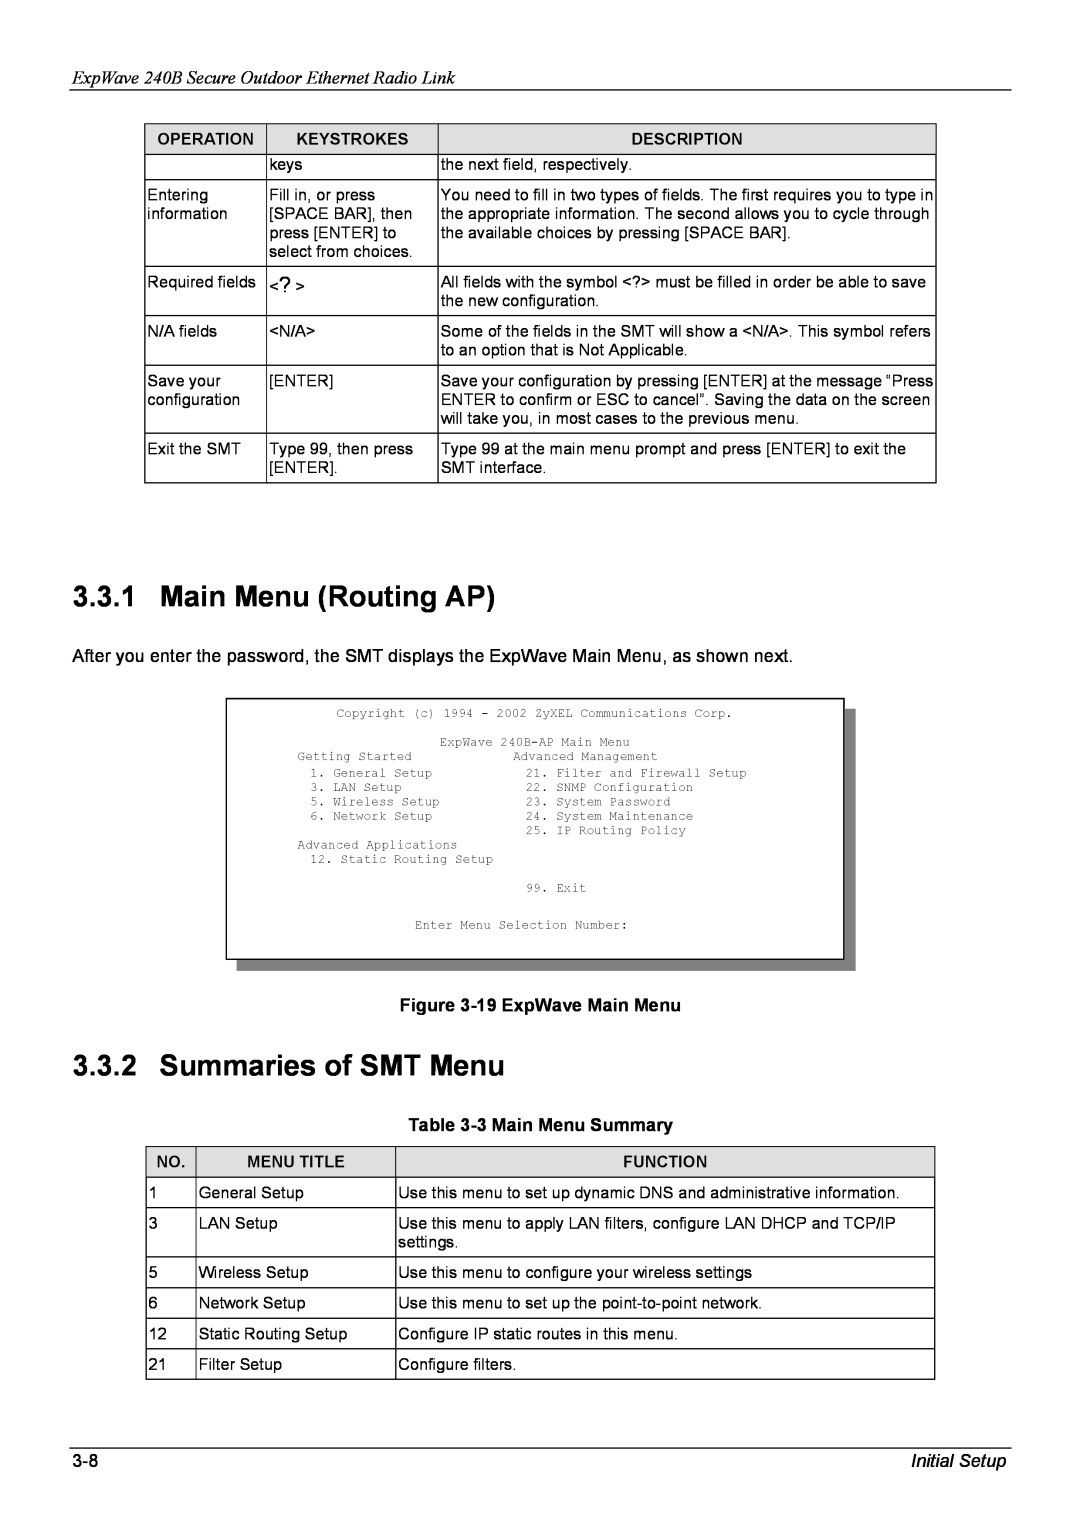 ZyXEL Communications manual Main Menu Routing AP, Summaries of SMT Menu, ExpWave 240B Secure Outdoor Ethernet Radio Link 